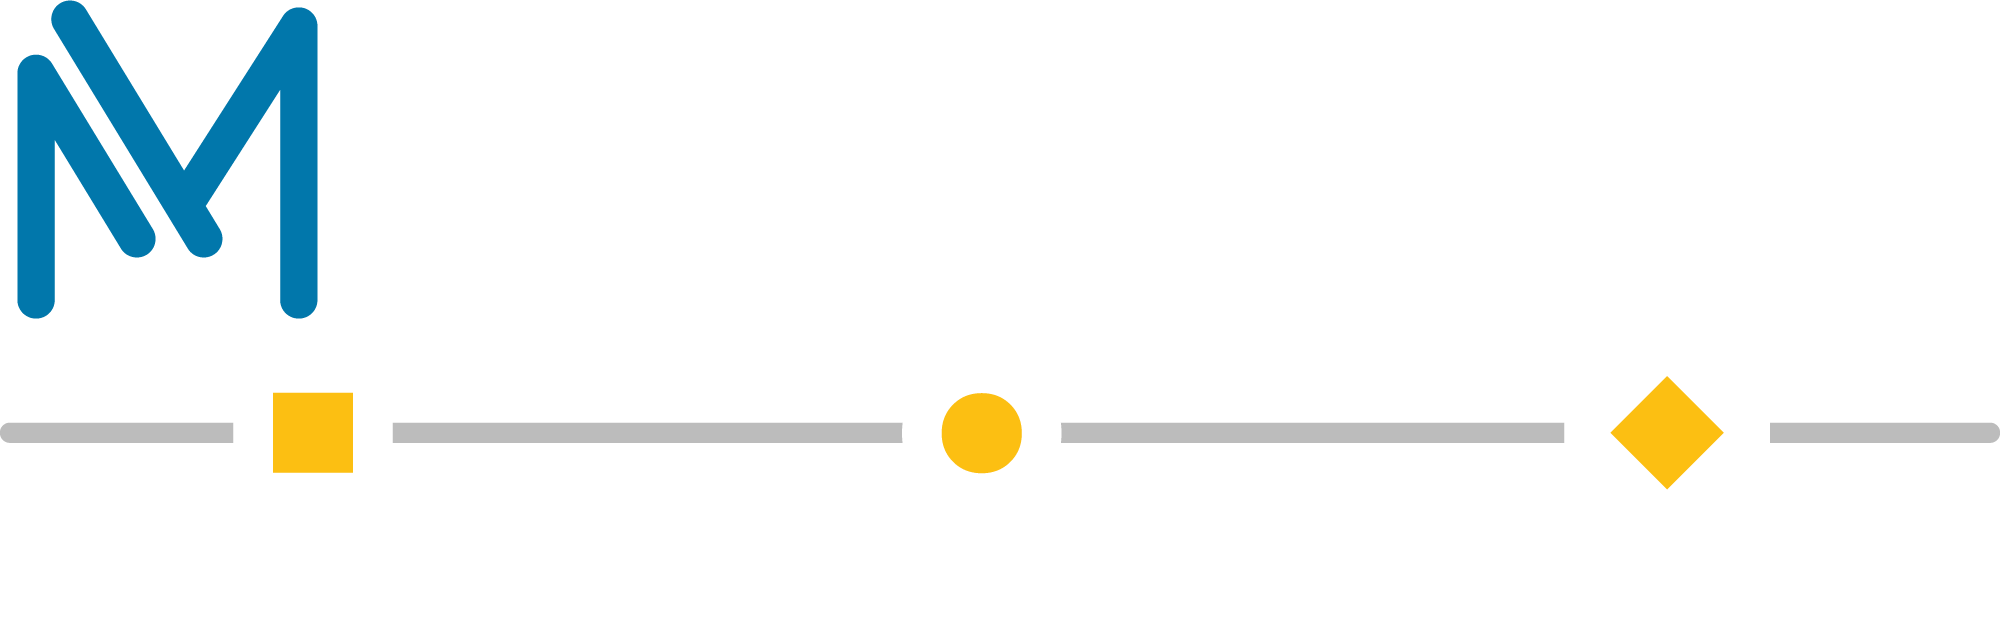 Motioner Logo